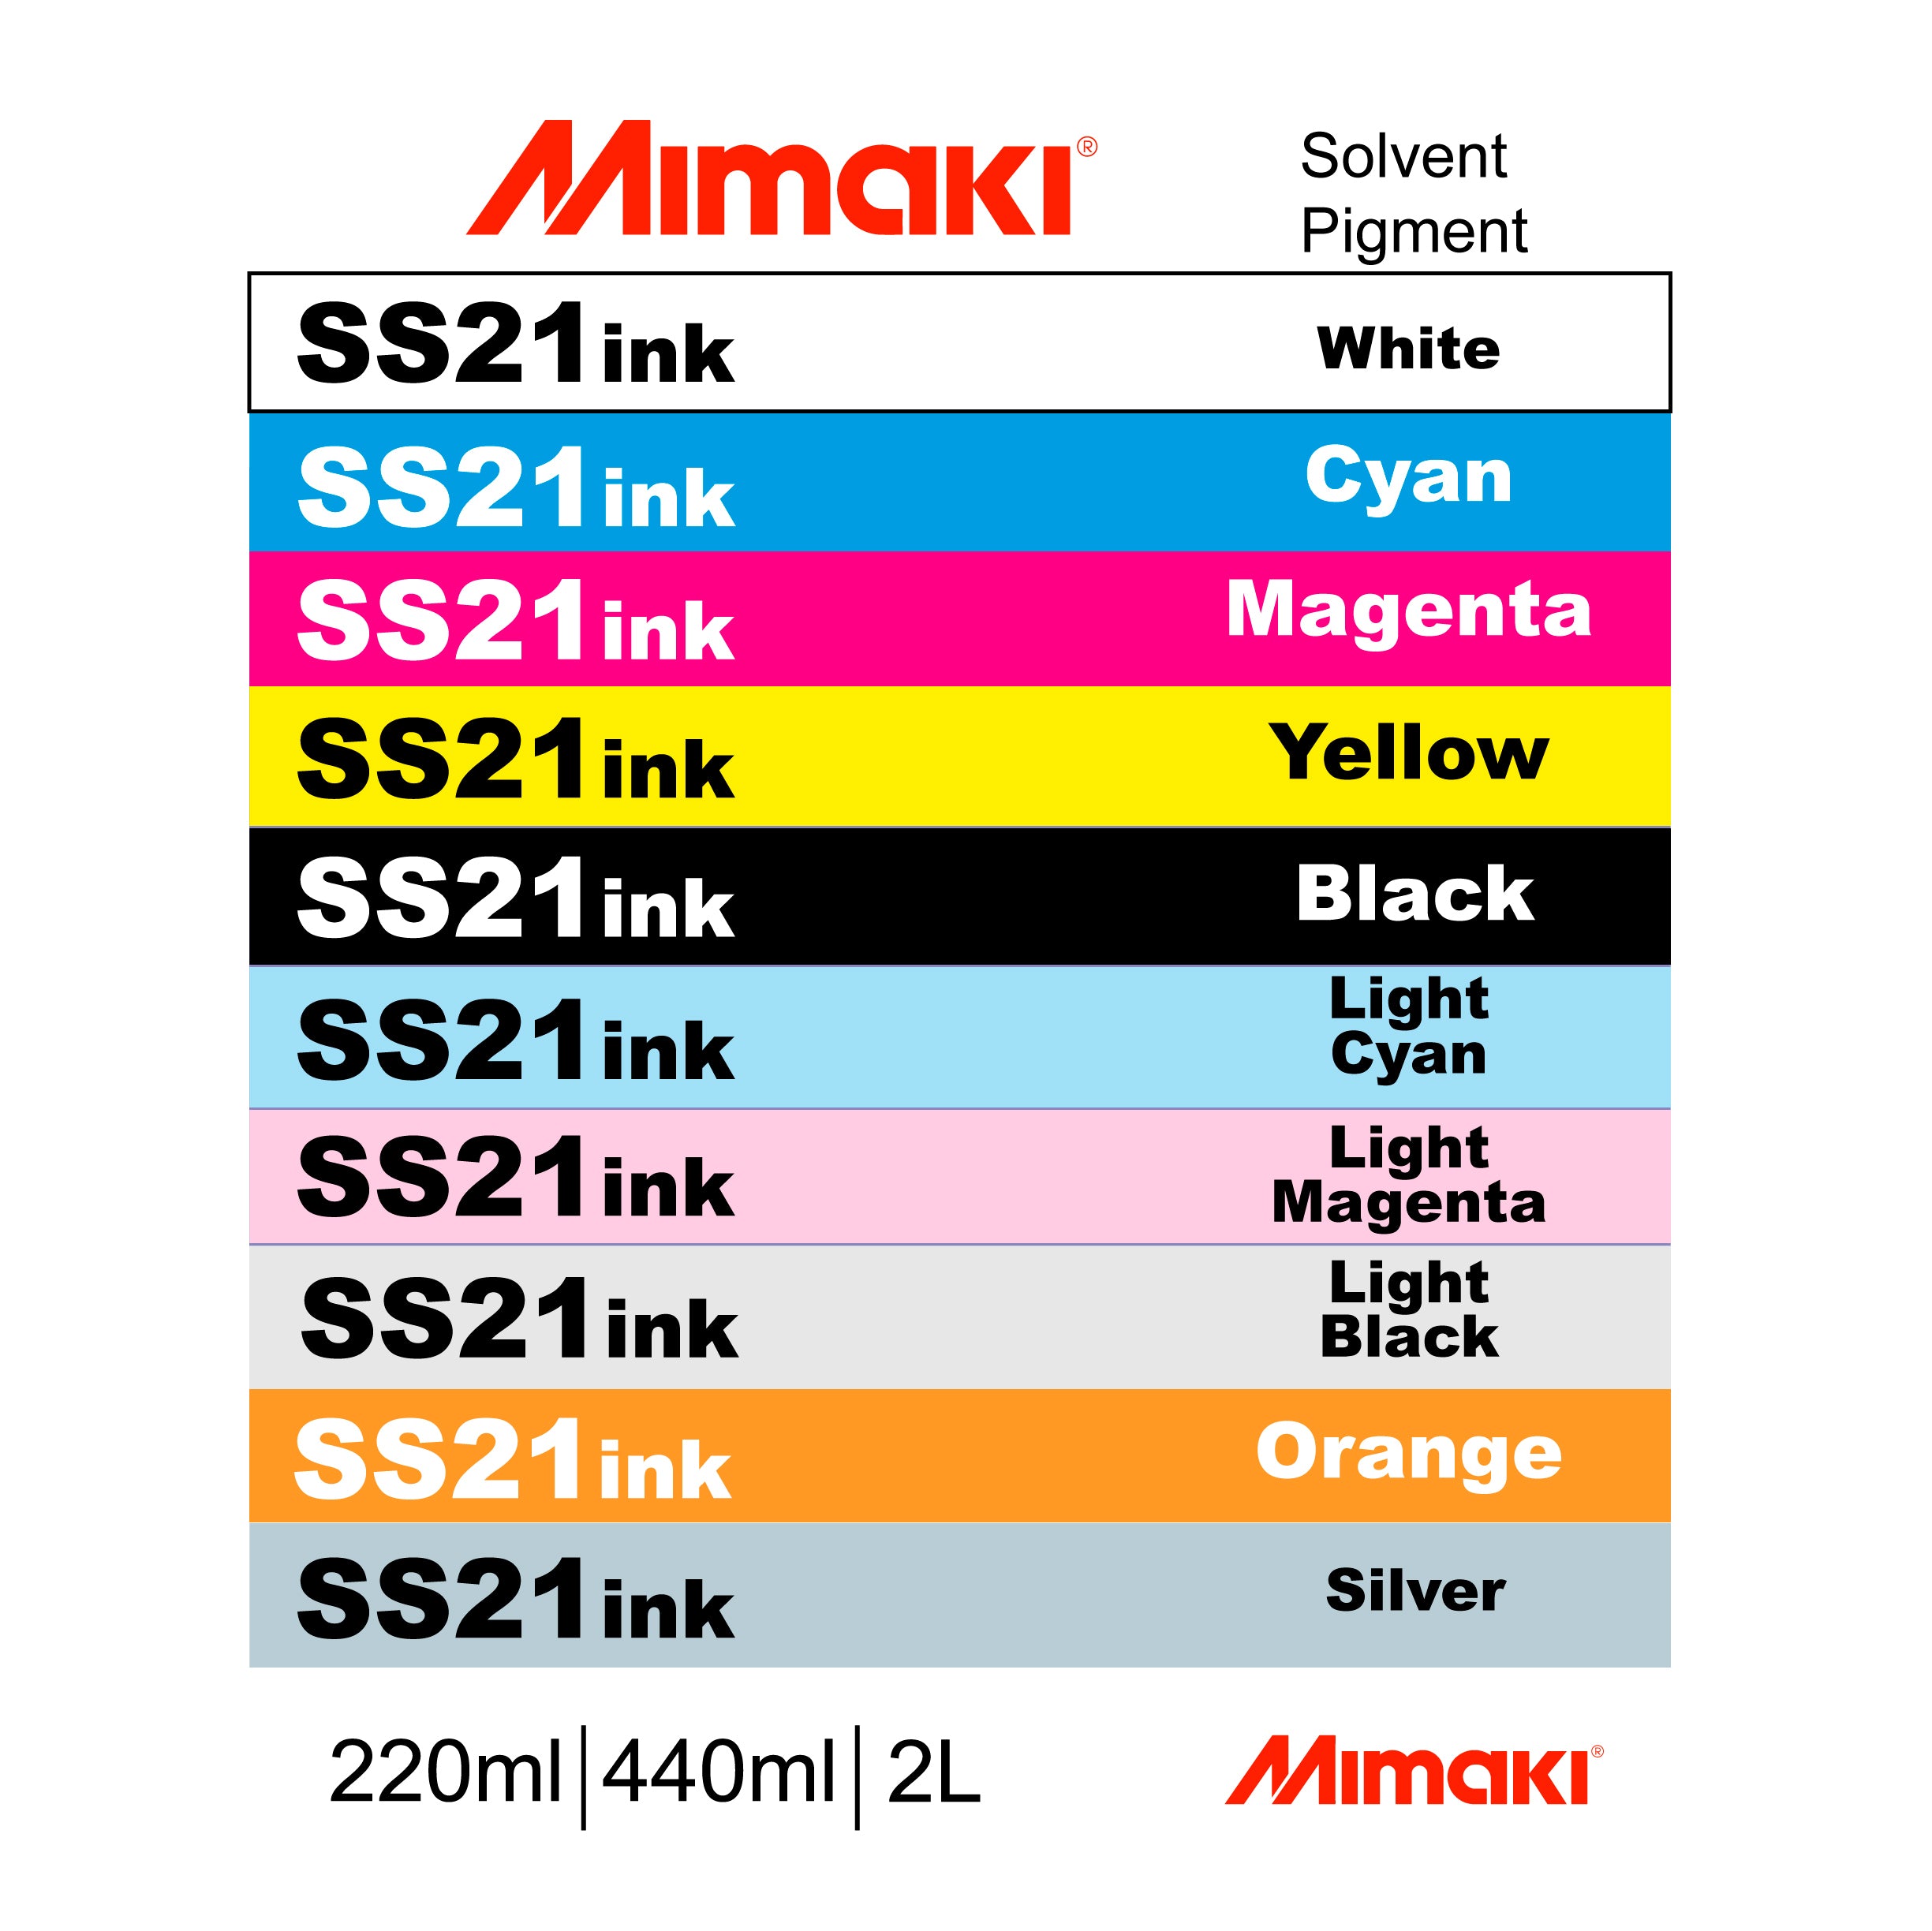 mimaki ss21 ink set color options - solvent pigment